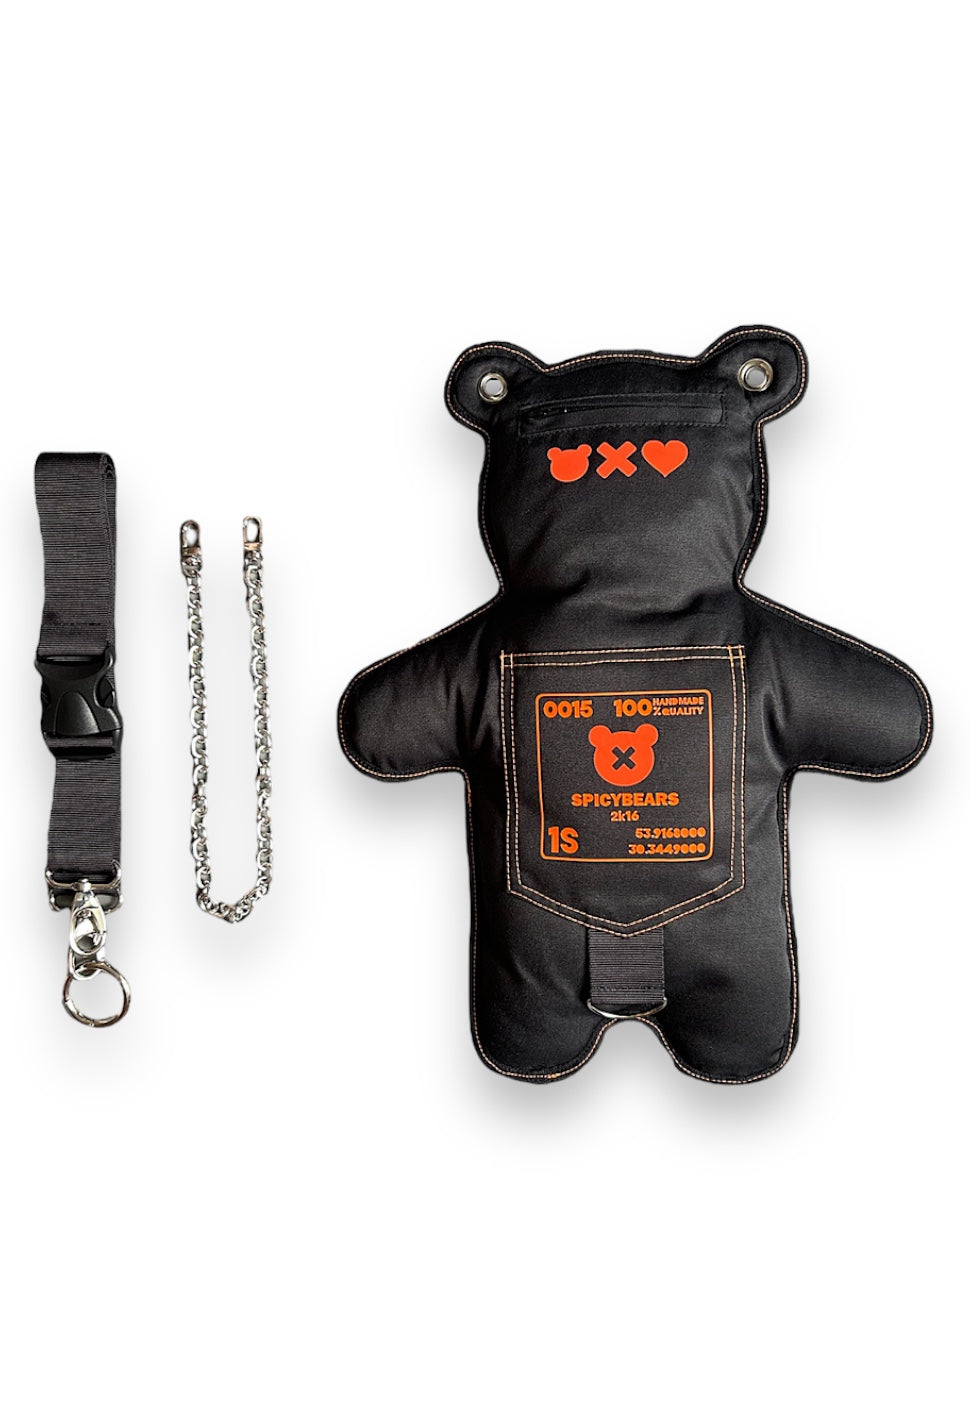 SkullBEARS 2.0 | Black | Fluorescent Reflective Orange Bear Bag - SPICYBEARS